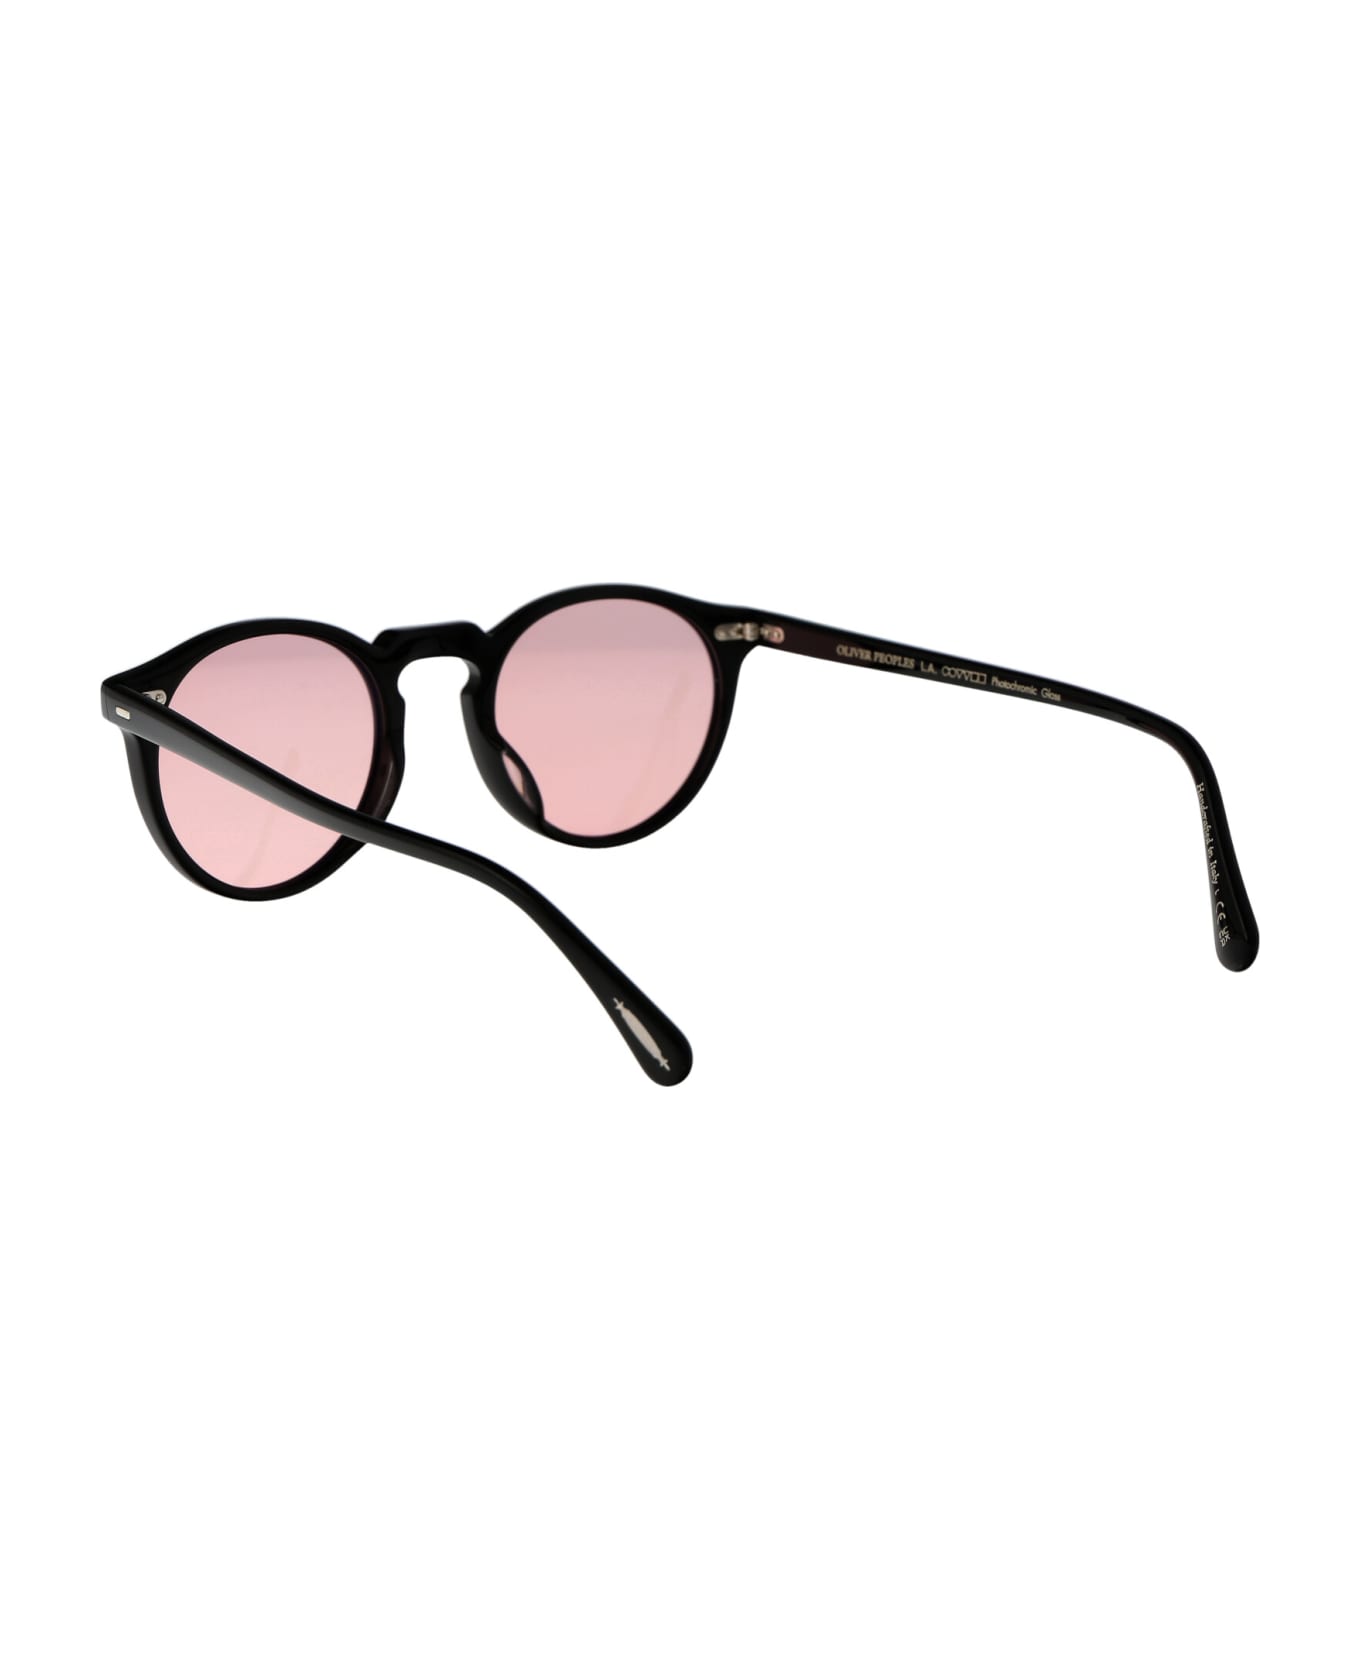 Oliver Peoples Gregory Peck Sun Sunglasses - 10054Q Black サングラス